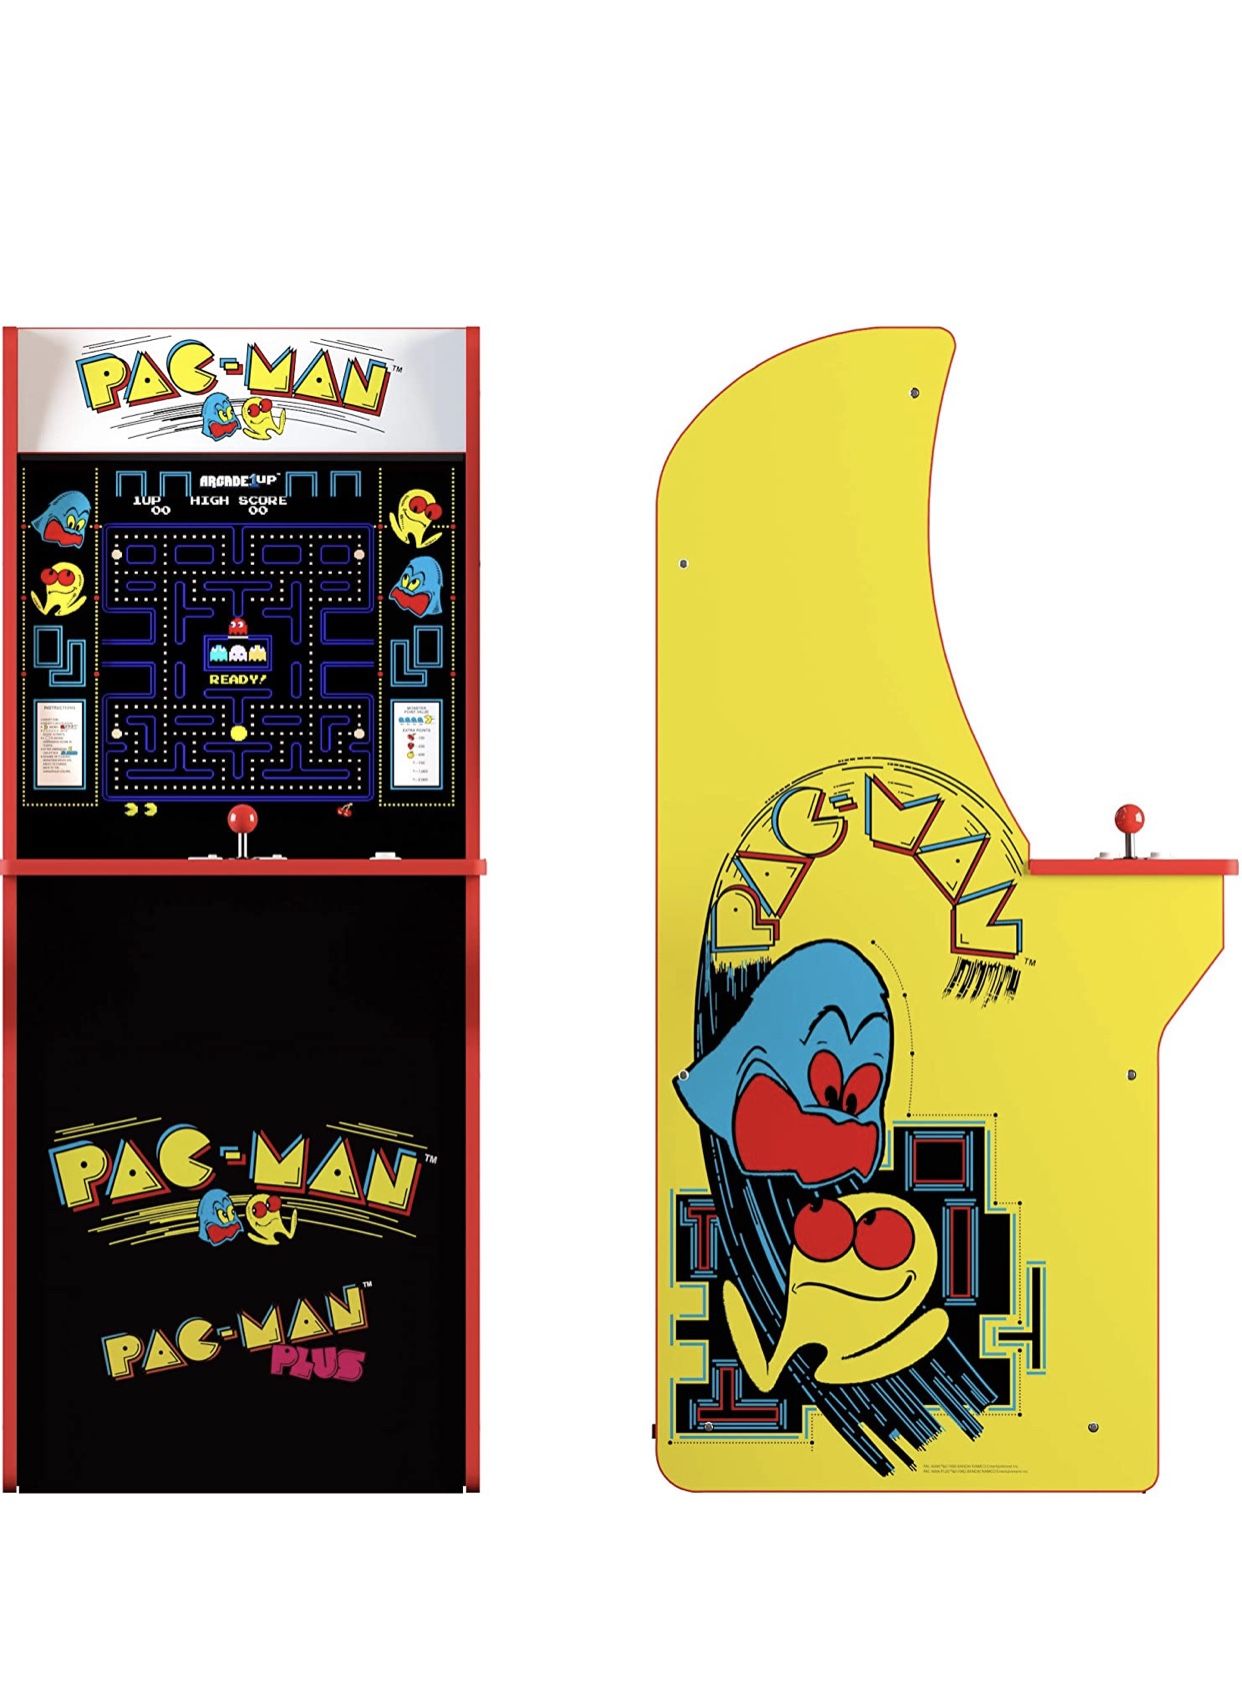 Arcade Video Game PAC-MAN Pacman Arcade1up